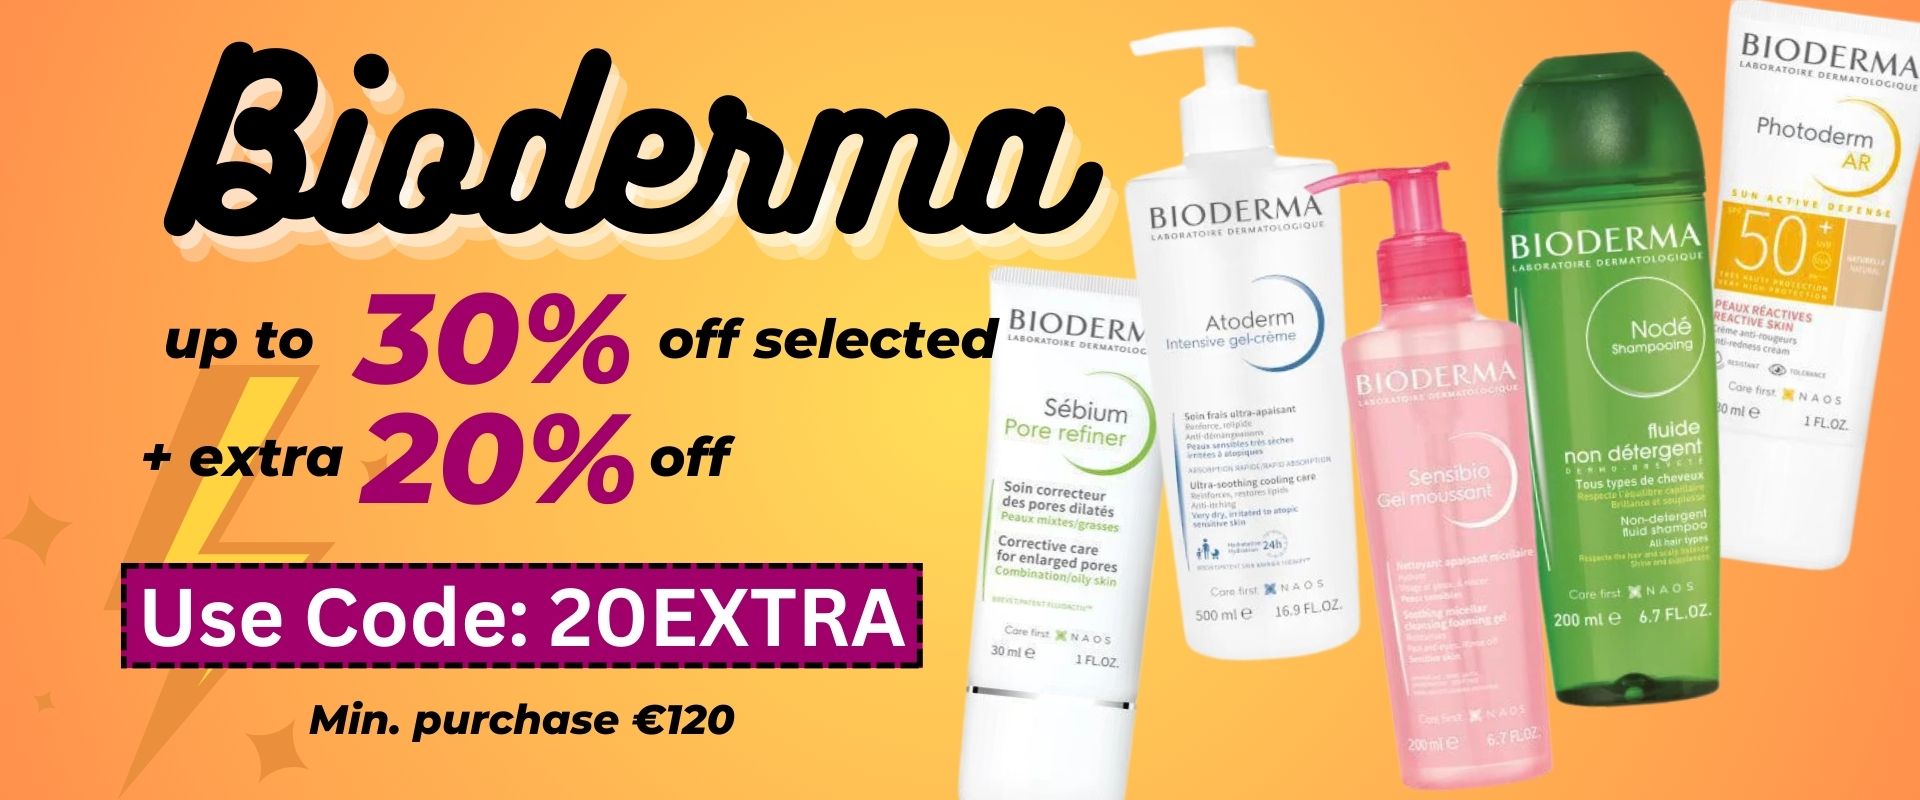 Spring Sale includes Bioderma Atoderm, Photoderm Sunscreen, Sebium Pore Refiner and more.